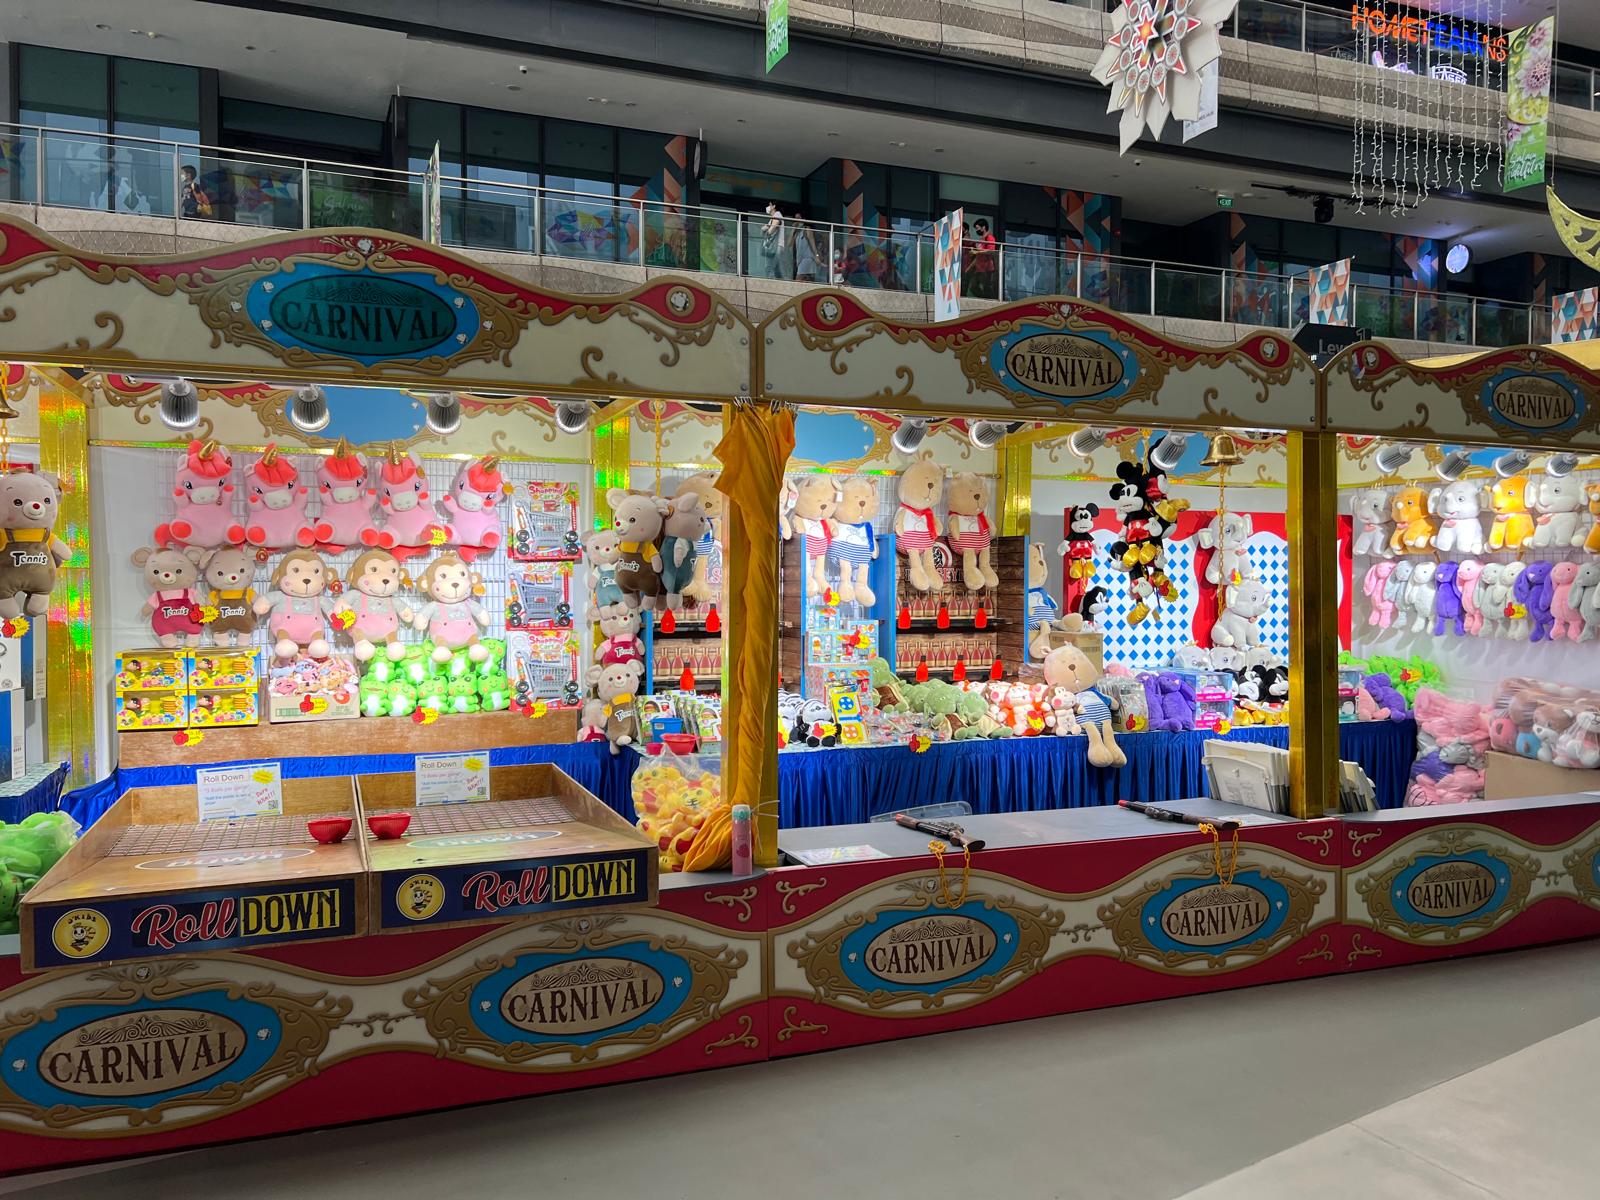 Carnival Royal Booth